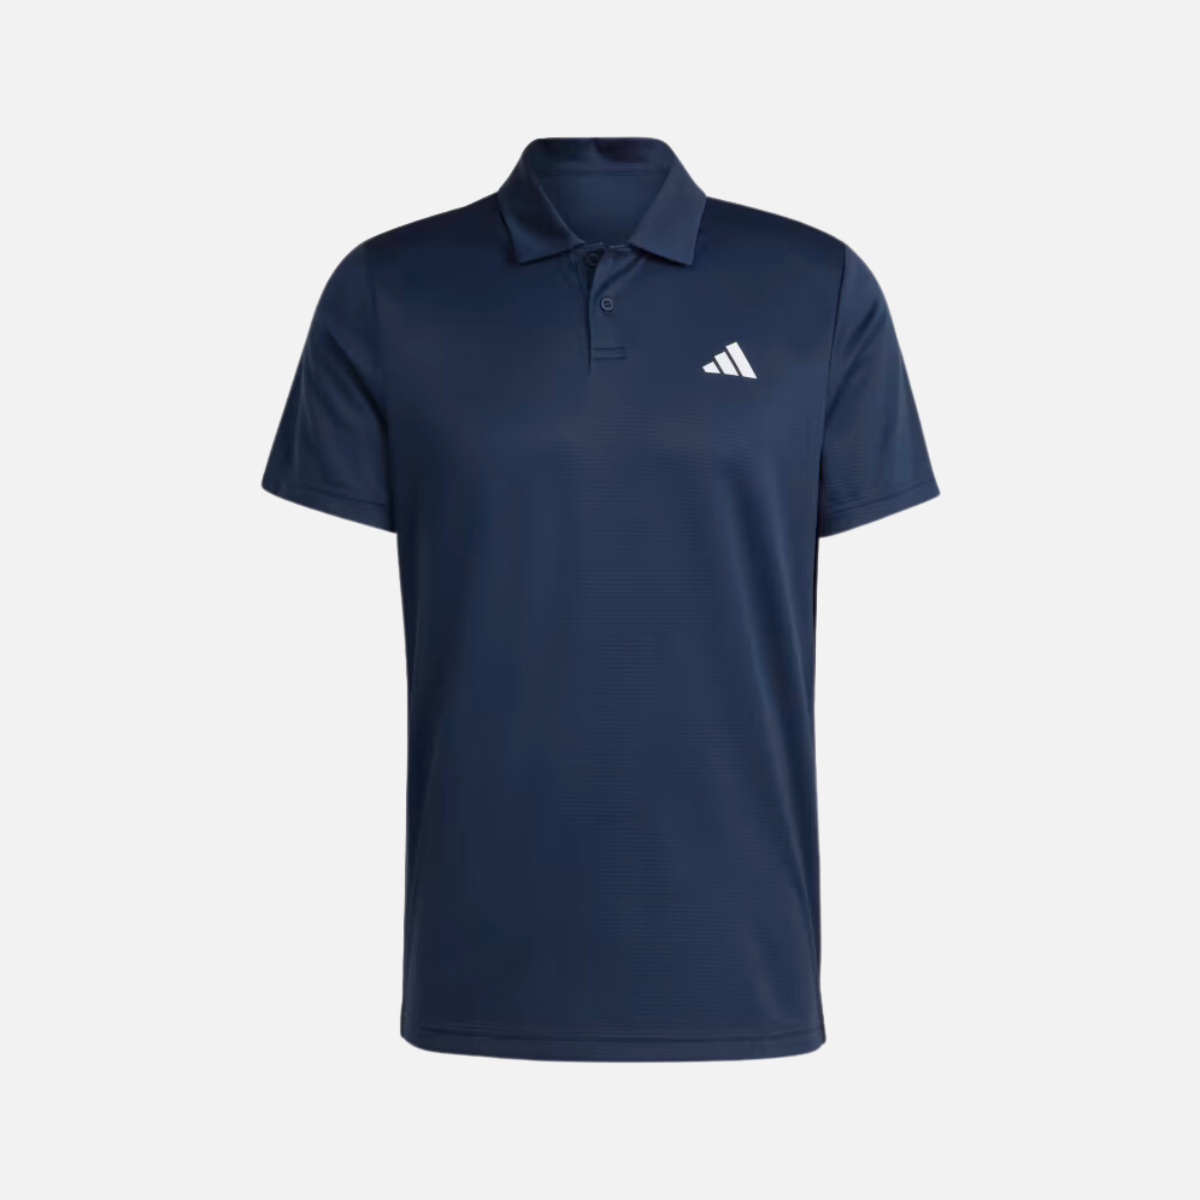 Adidas Heat.RDY Men's Tennis T-shirt -Collegiate Navy